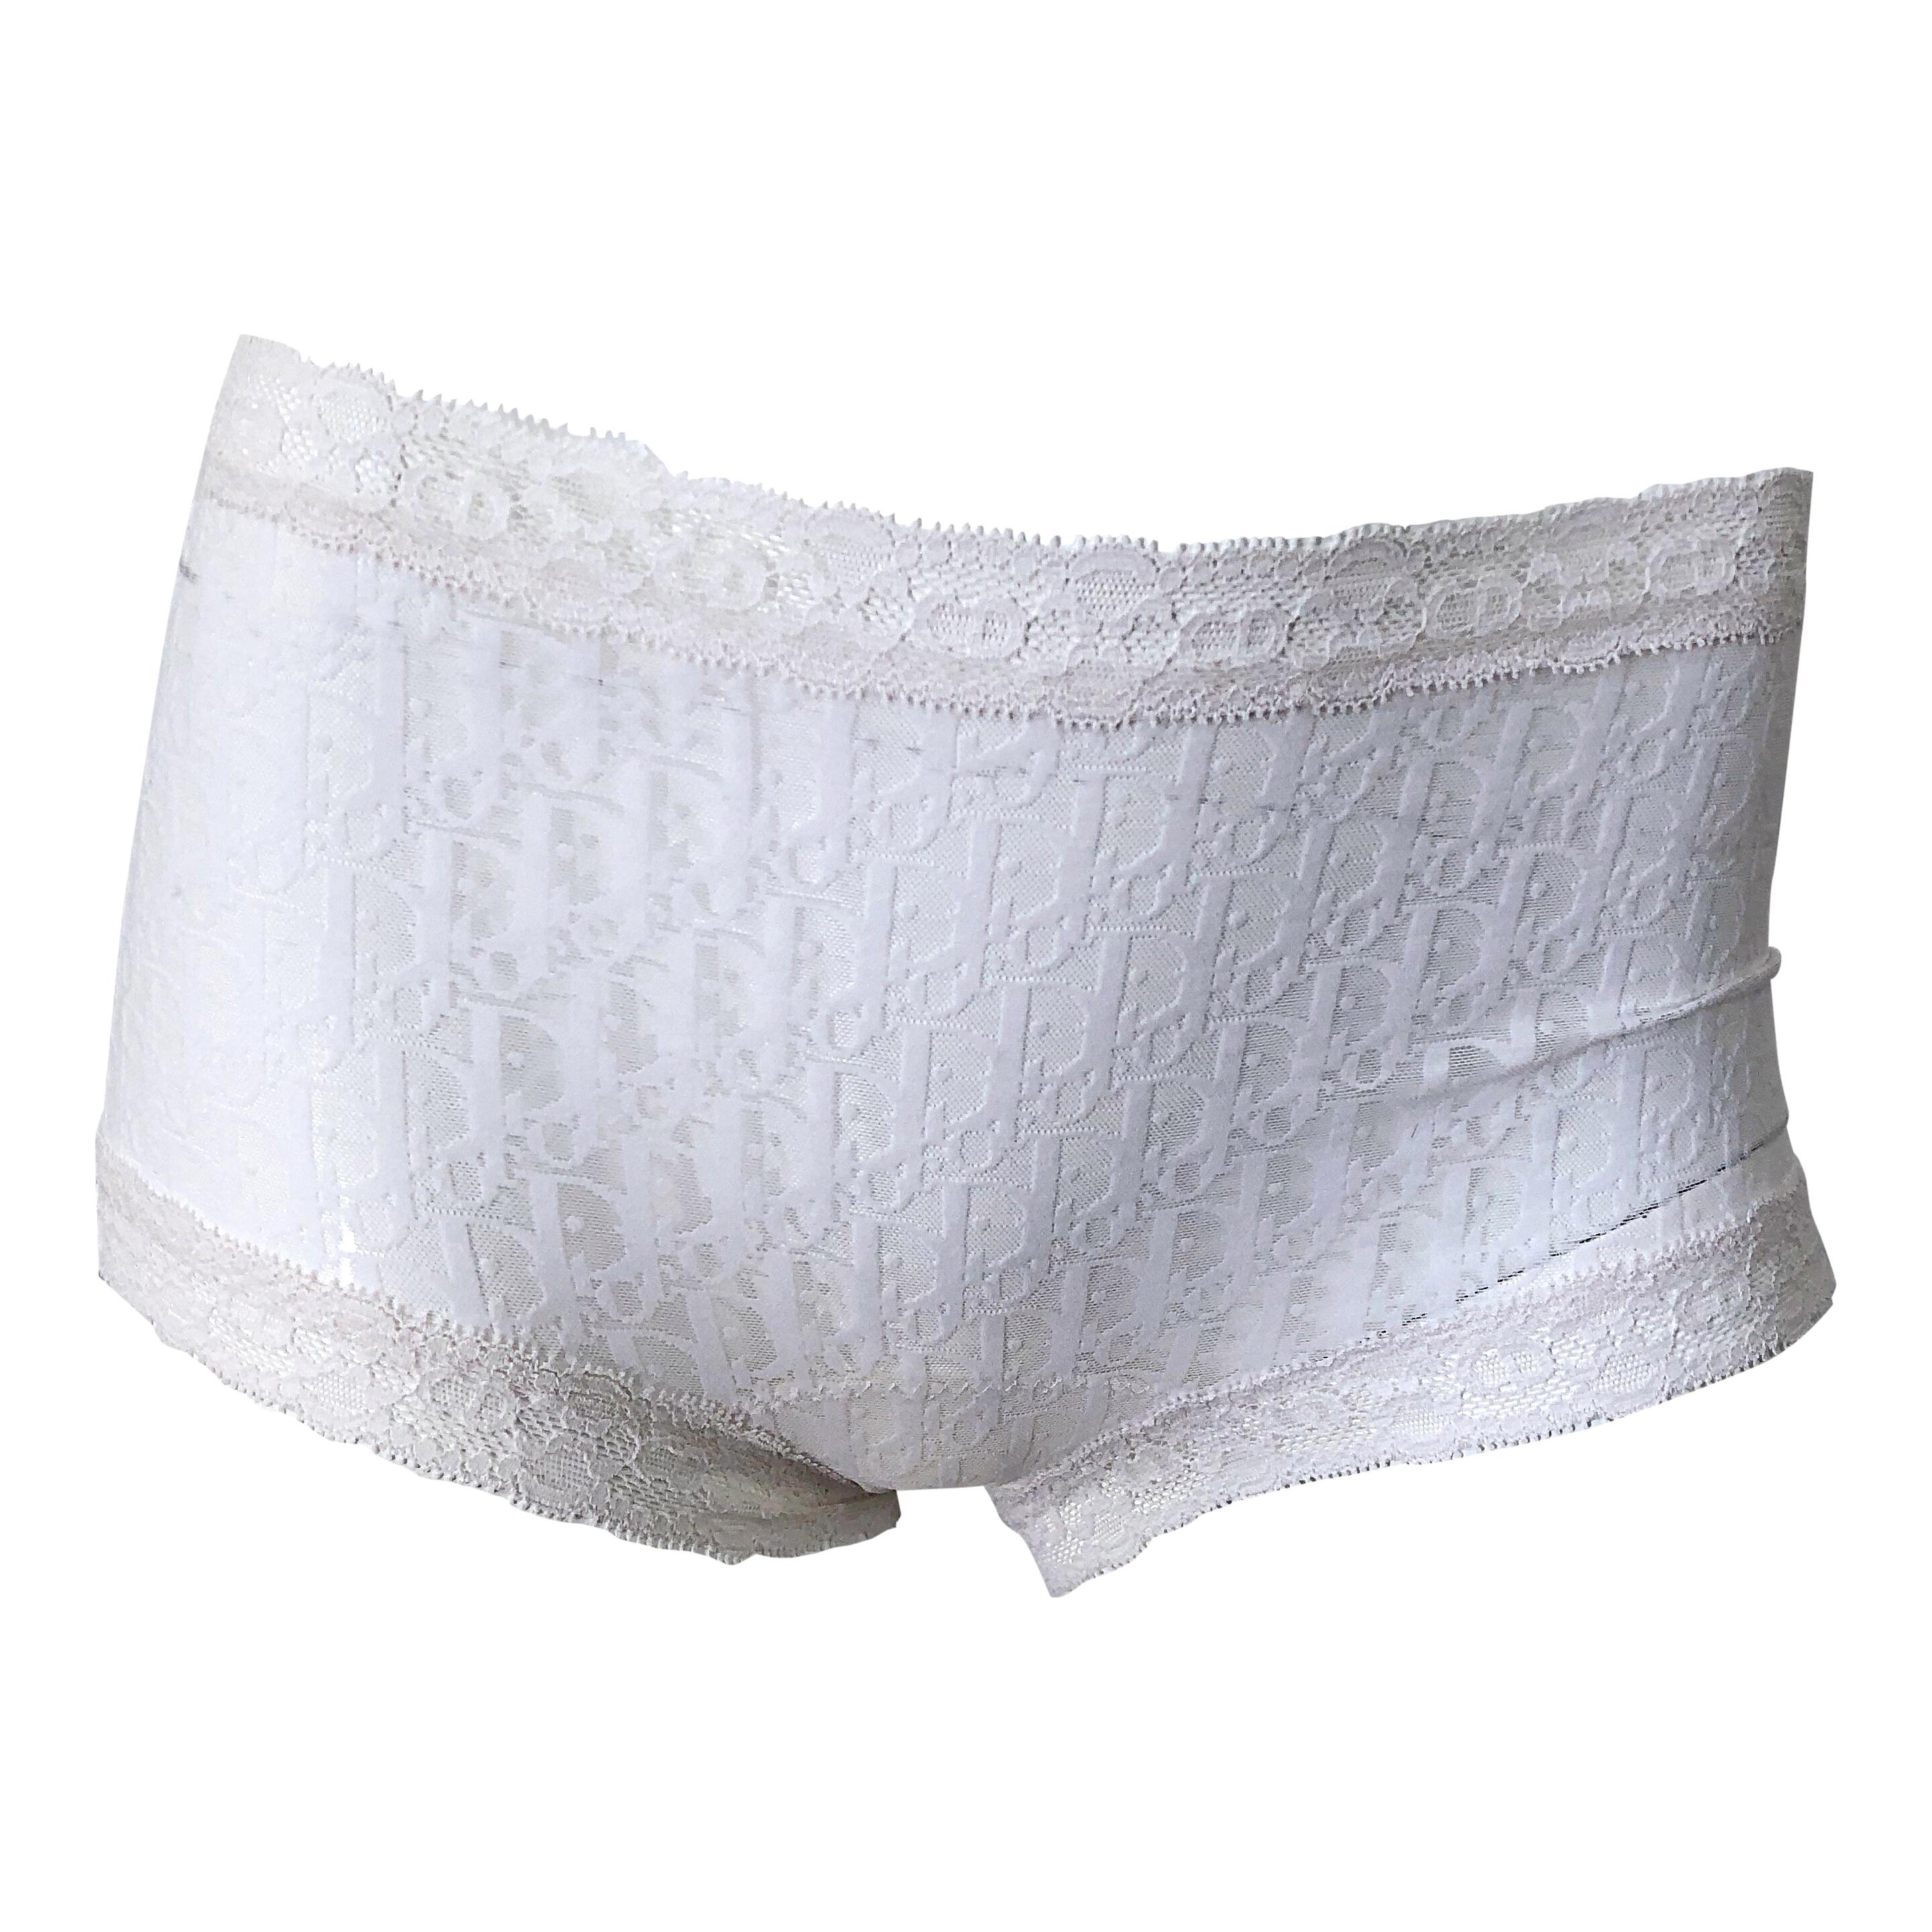 Unworn Christian Dior 1990s Logo White Sheer Low Rise Vintage Hot Pants Shorts